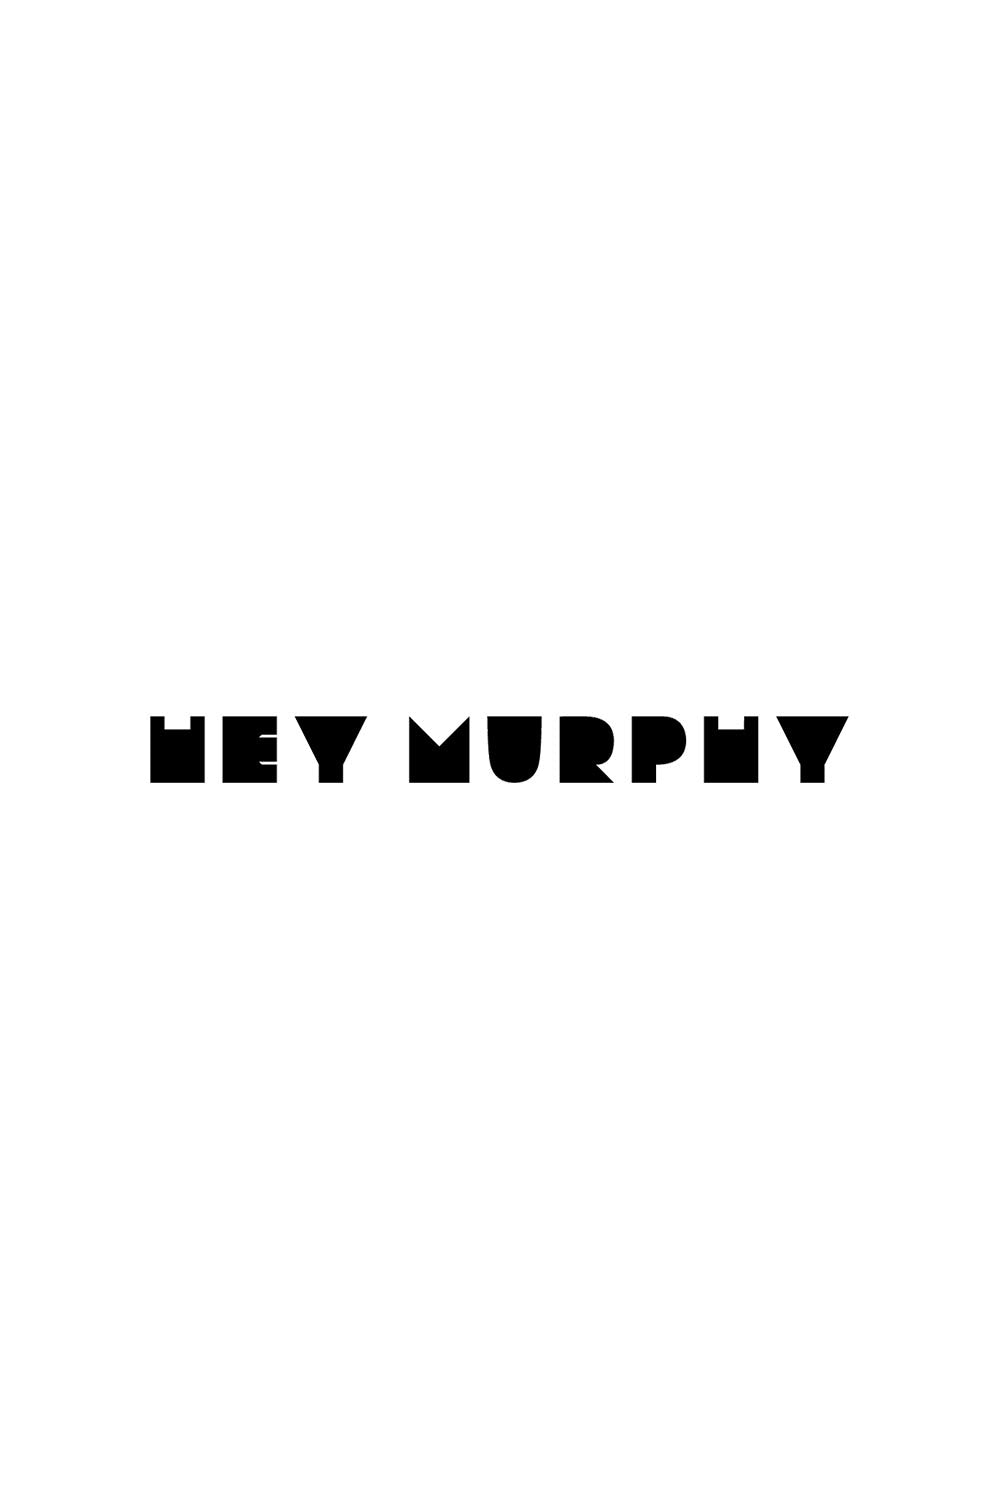 Hey Murphy